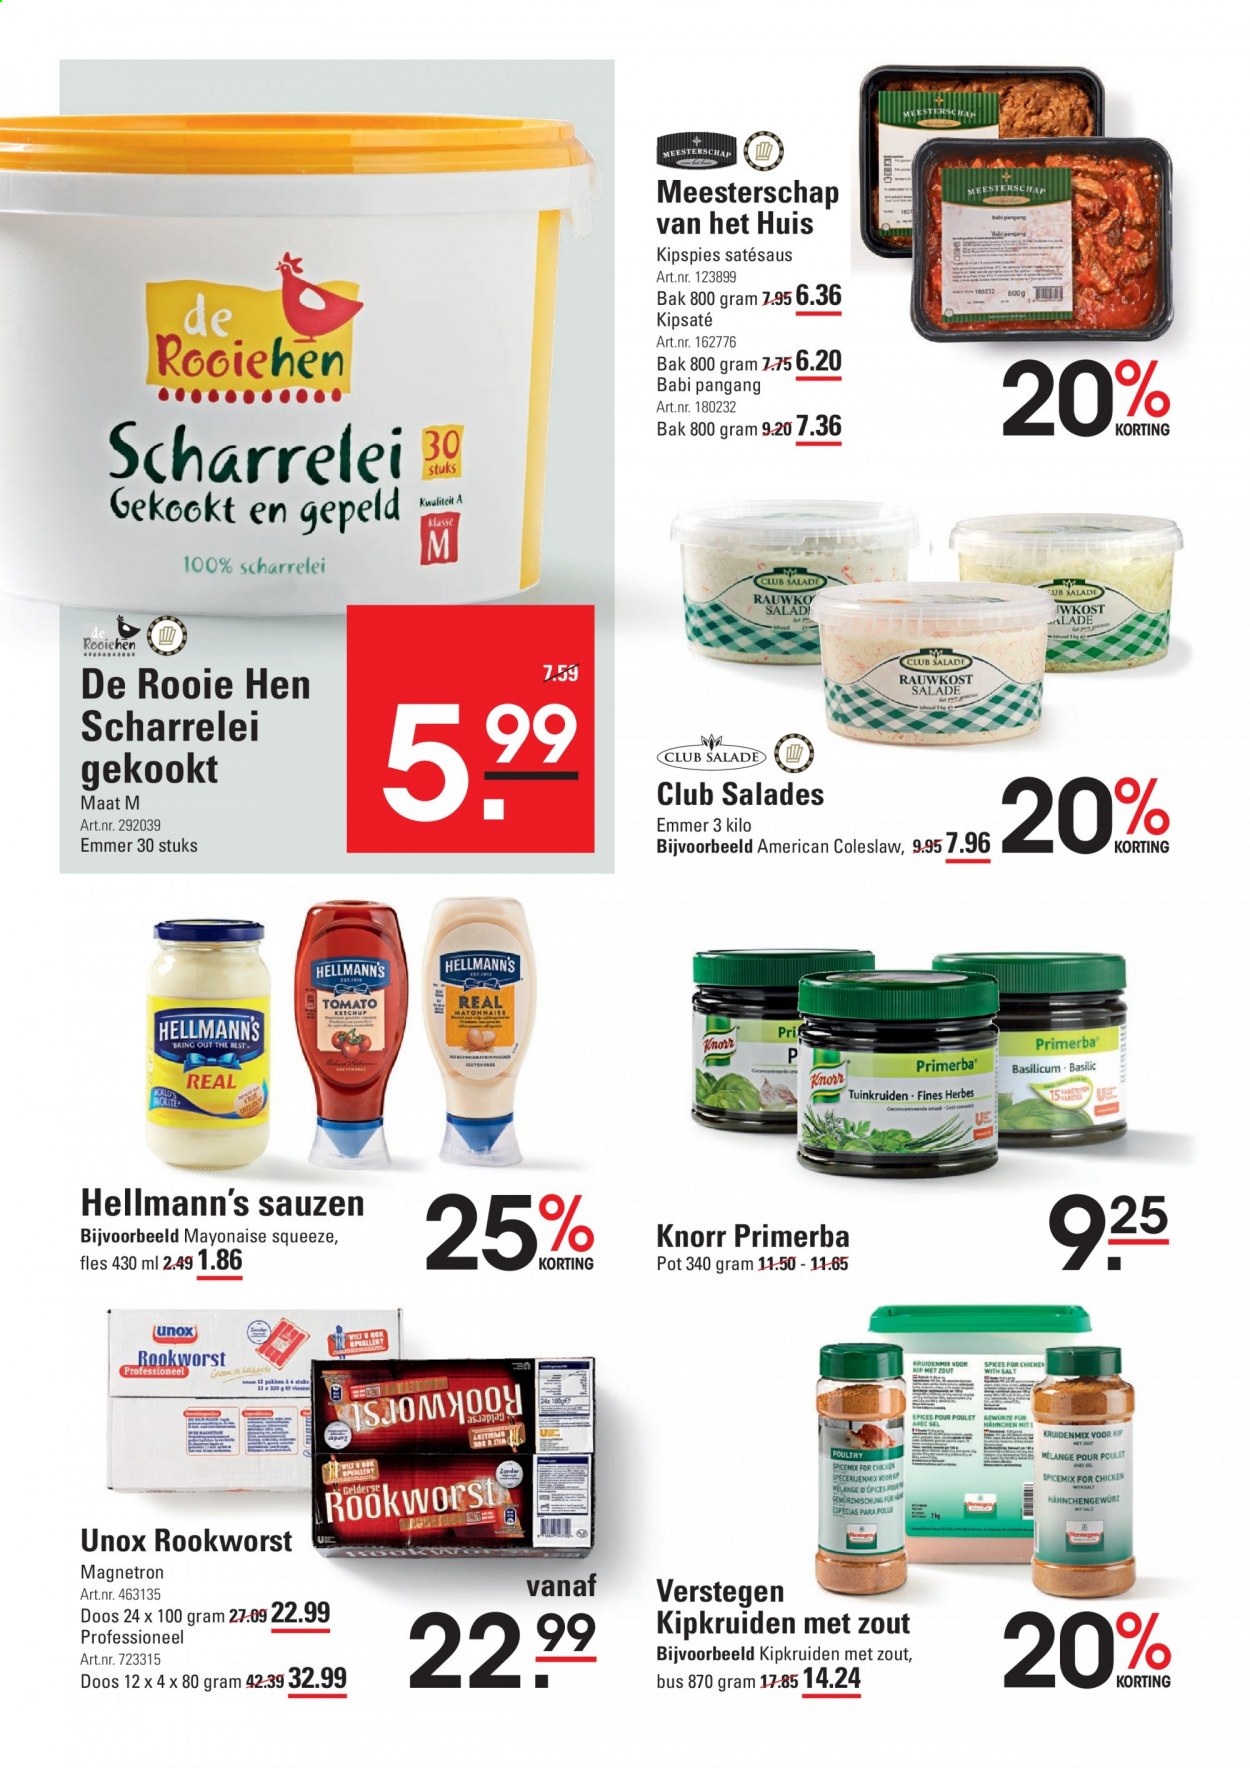 thumbnail - Sligro-aanbieding - 22-7-2021 - 9-8-2021 -  producten in de aanbieding - Knorr, rookworst, coleslaw, Hellmann's, mayonaise, basilicum. Pagina 8.